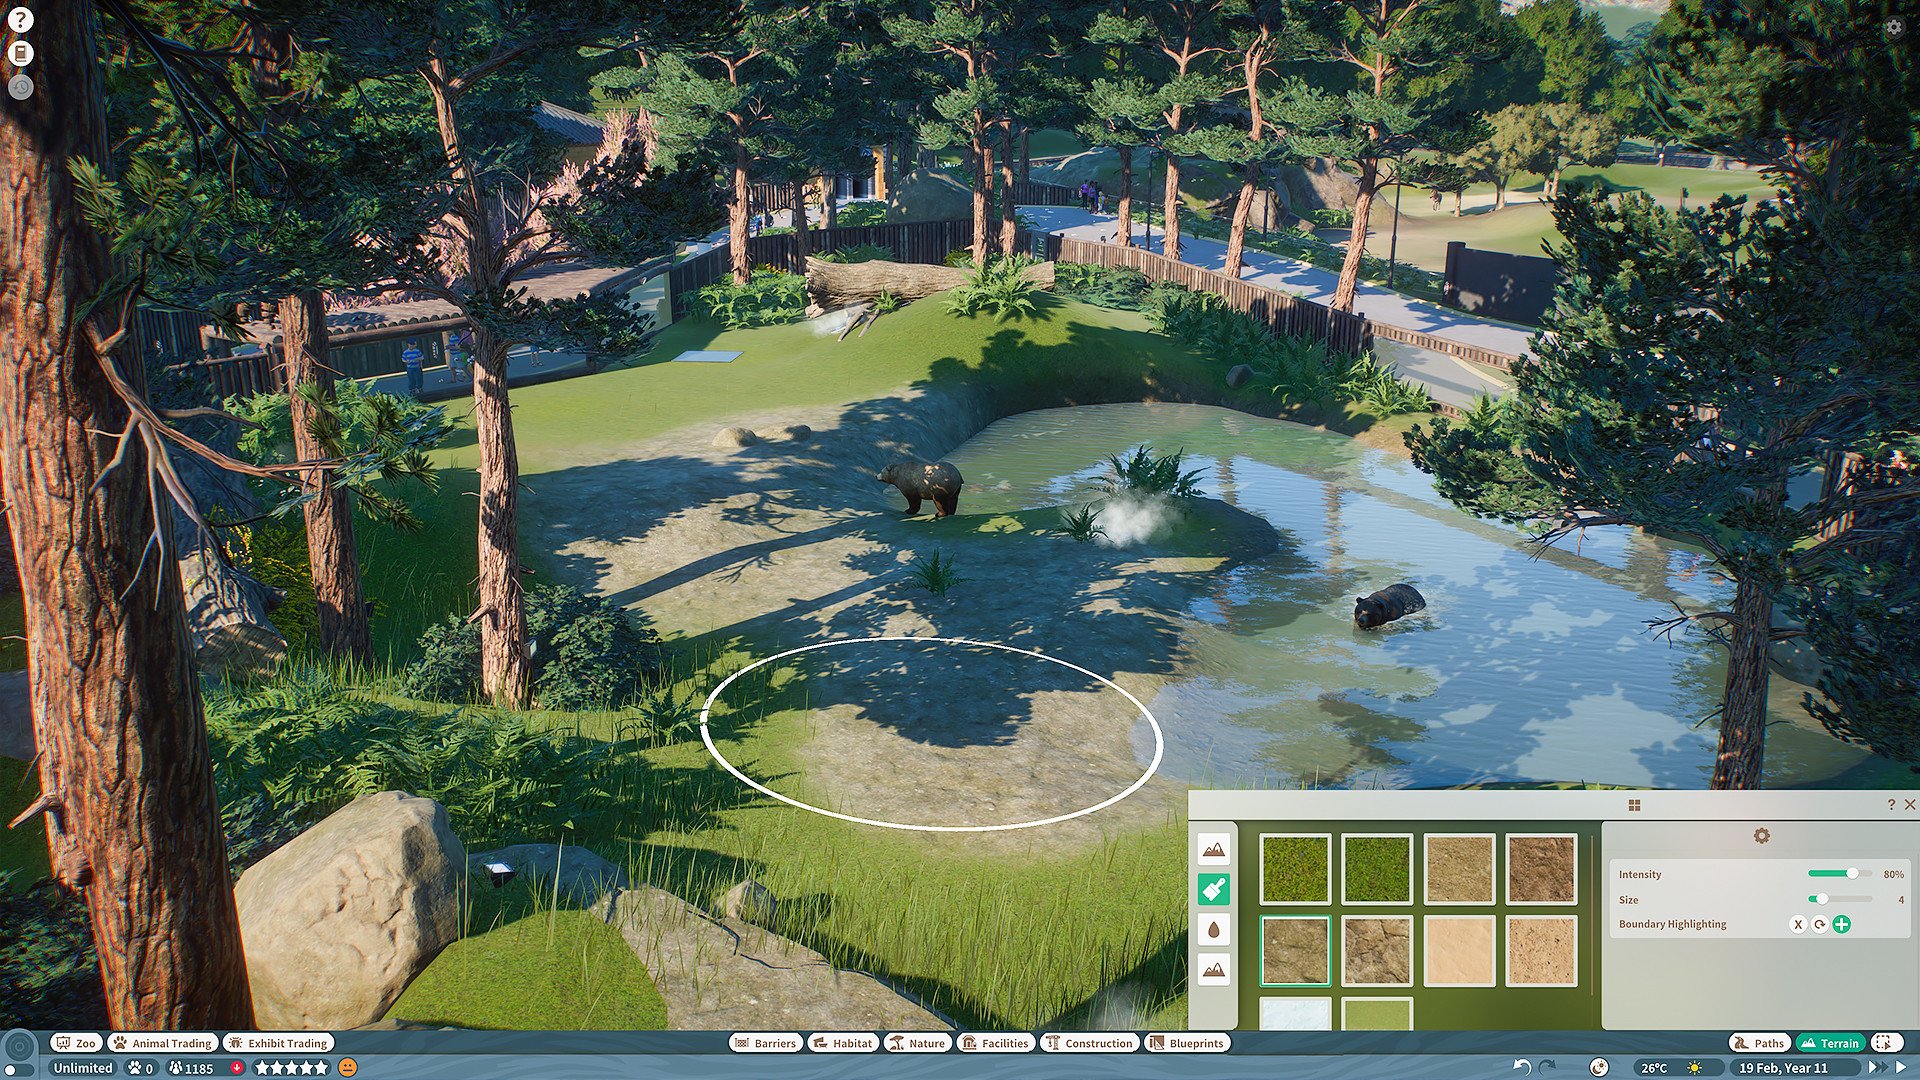 Screenshot for the game Planet Zoo [1.2.5.63260 + 4 DLC] (2019) скачать торрент RePack